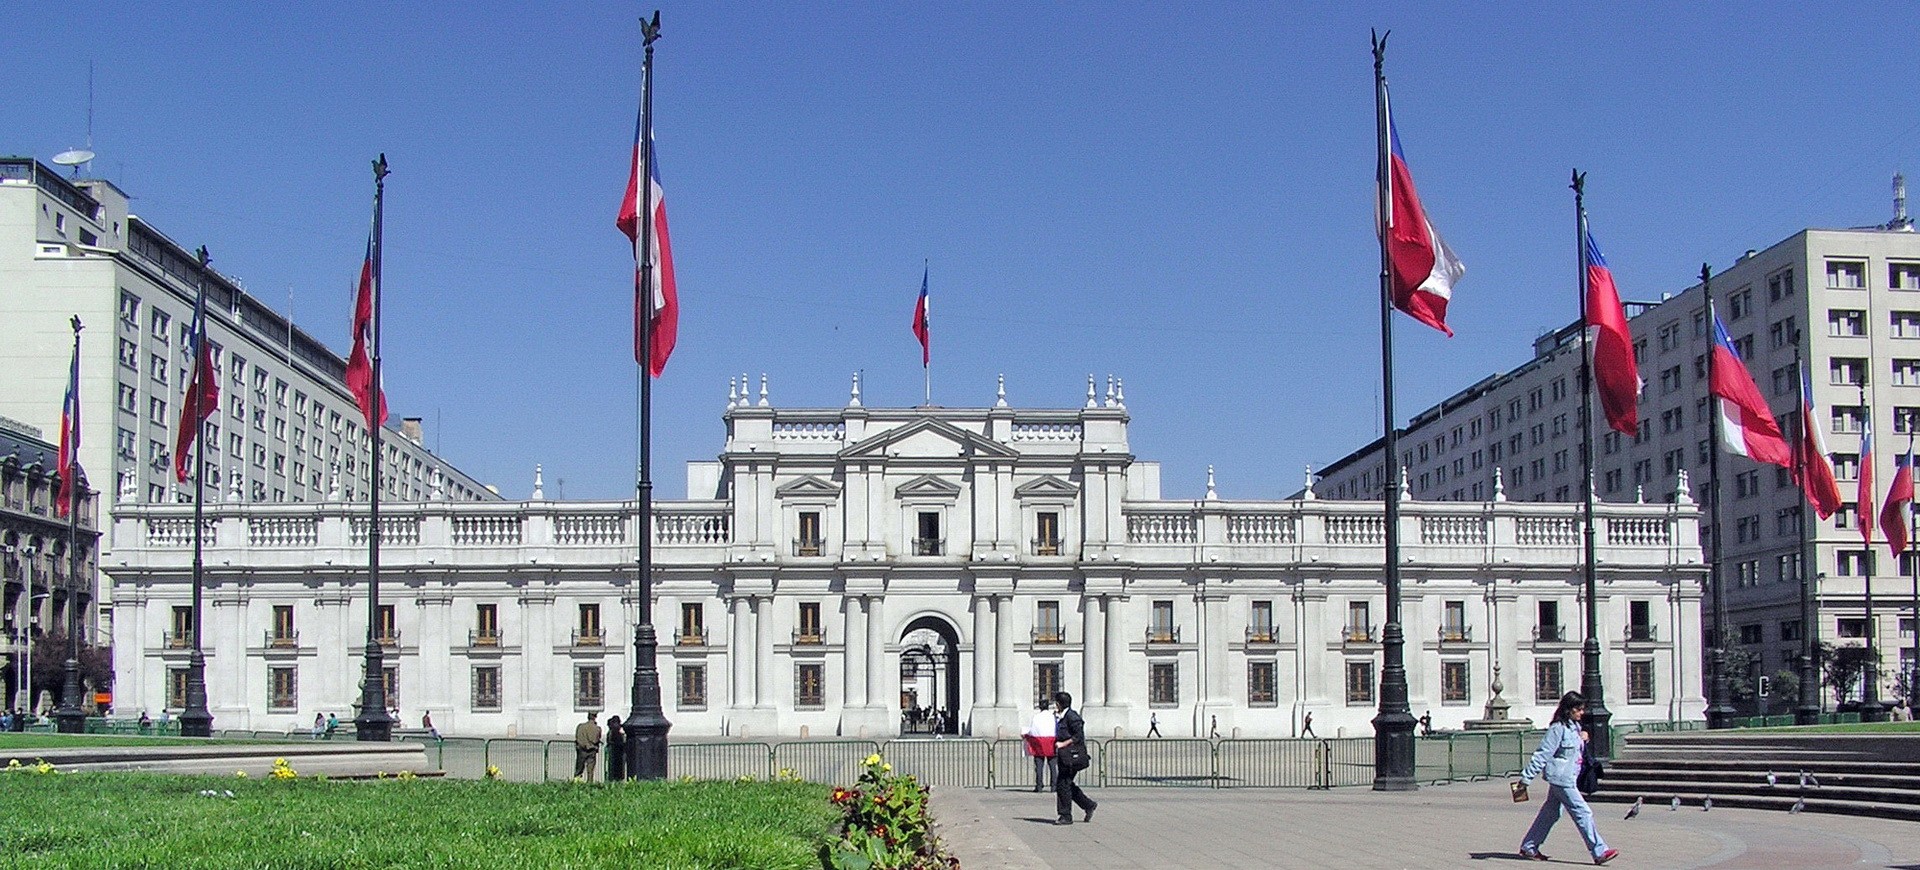 Chili Santiago Palais Présidentiel Palacio de la Moneda